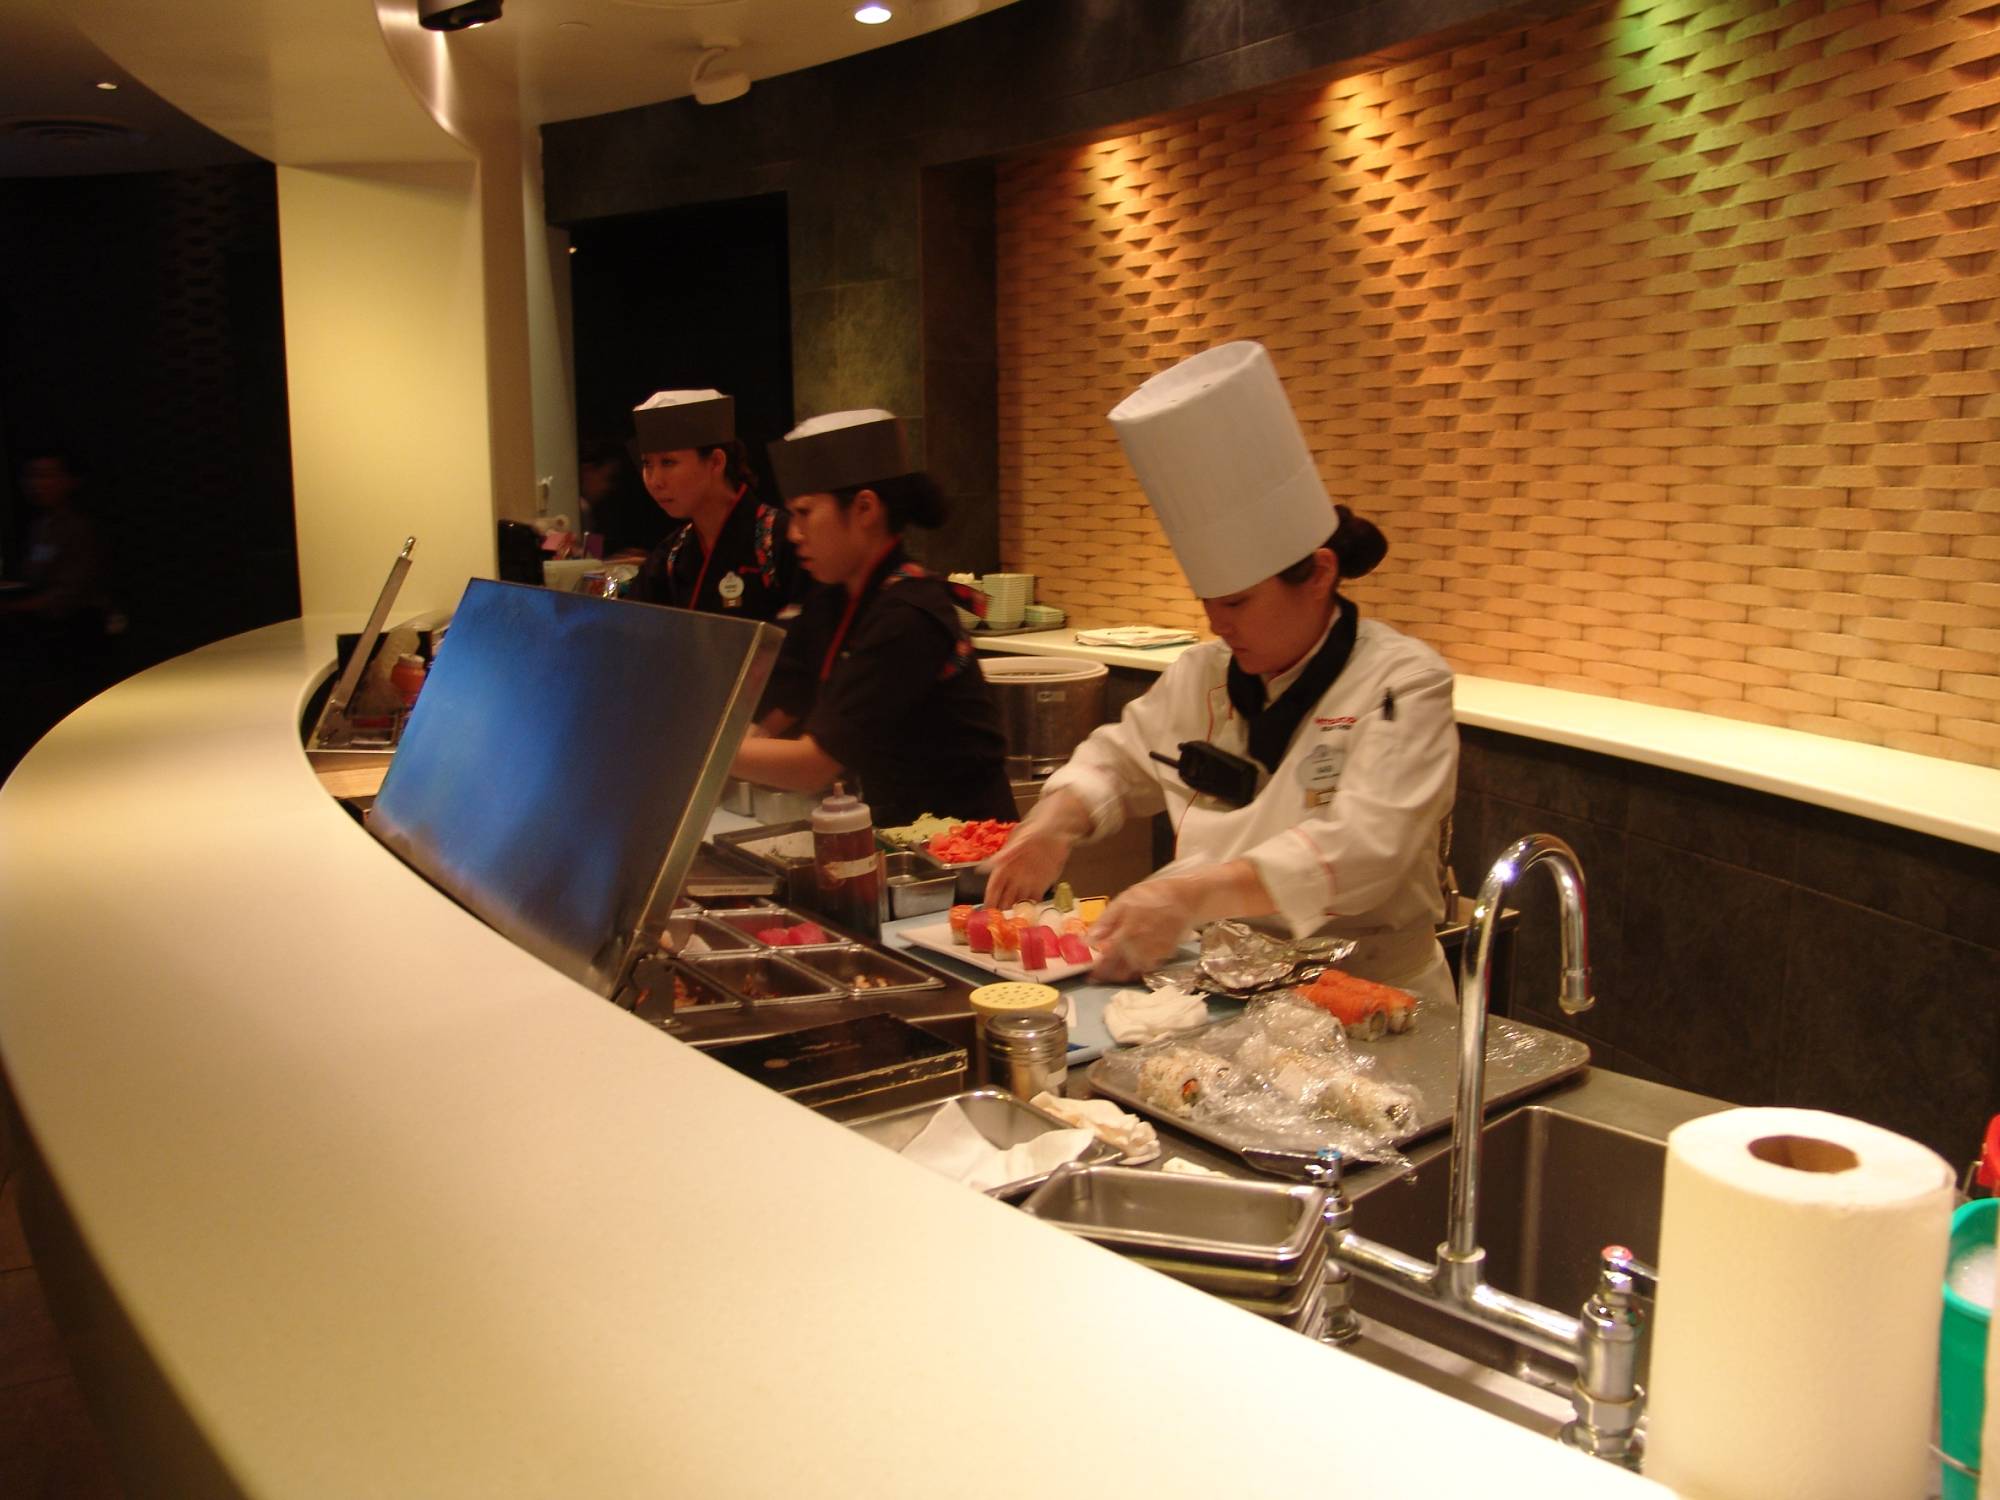 Discover one of Epcot's best kept secrets - Tokyo Dining |PassPorter.com